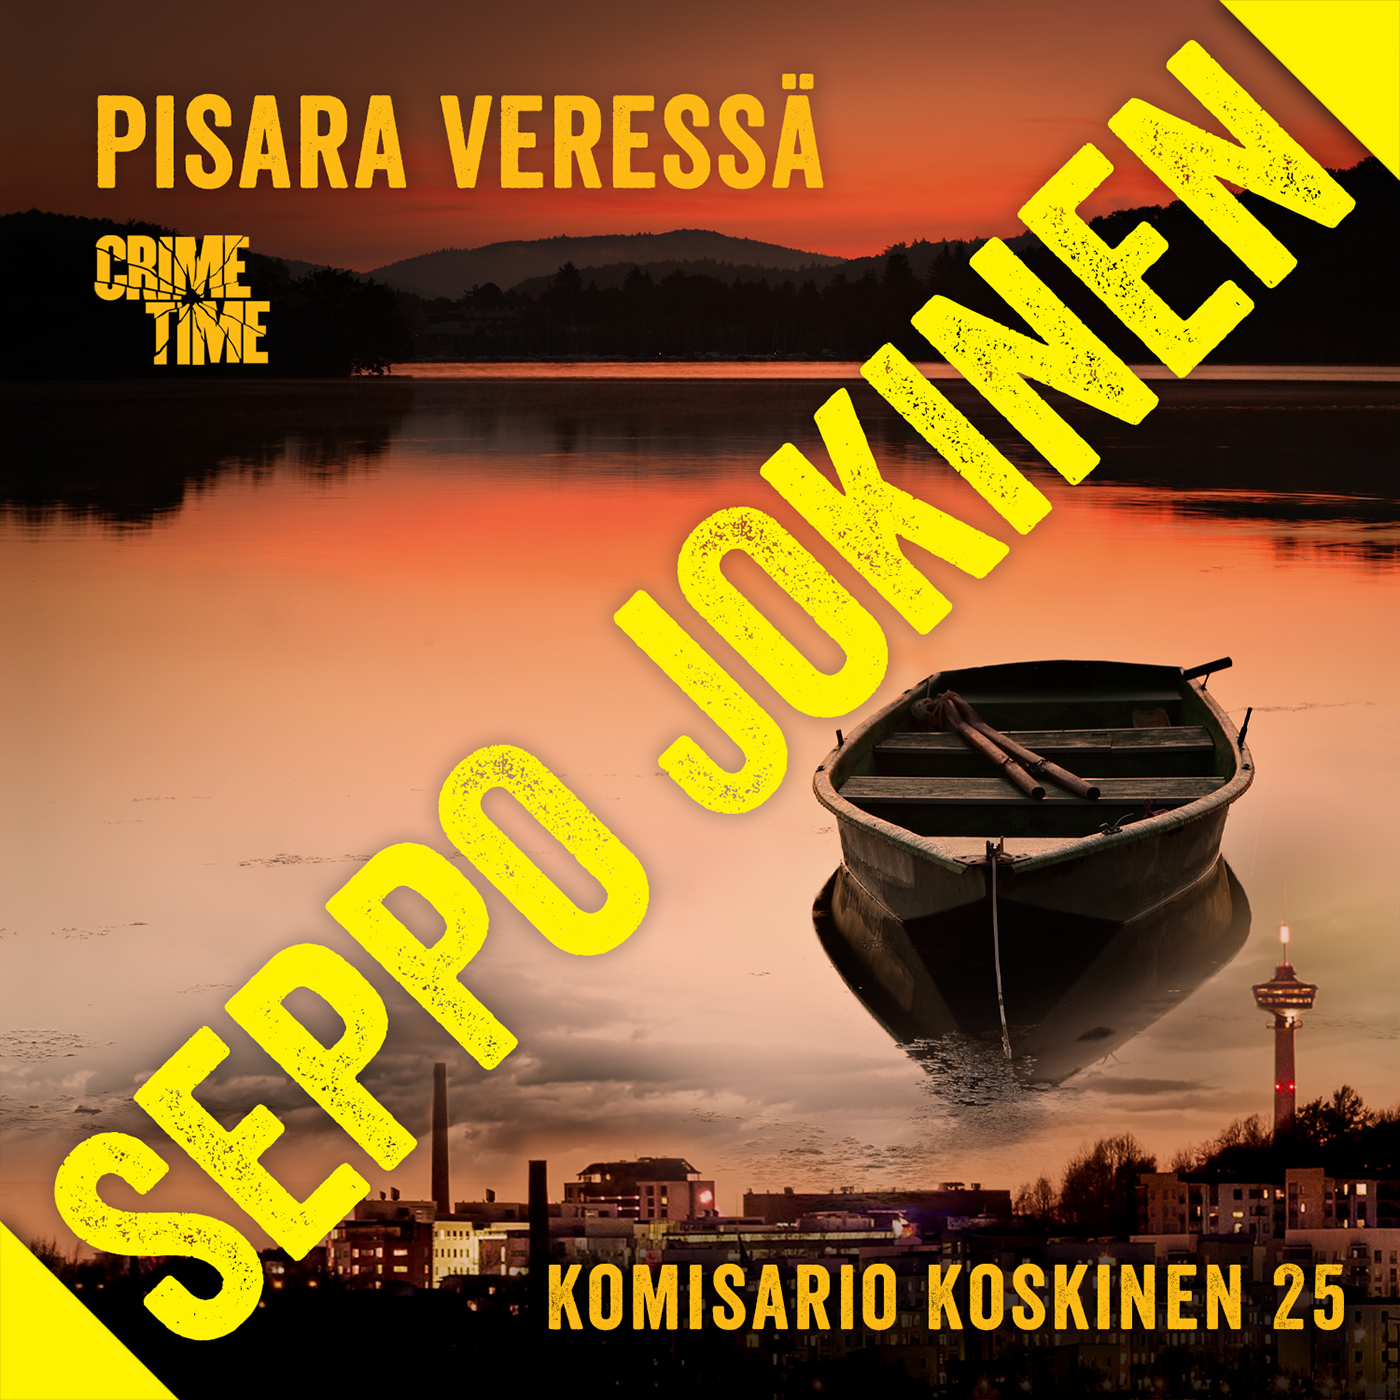 Jokinen, Seppo - Pisara veressä, audiobook